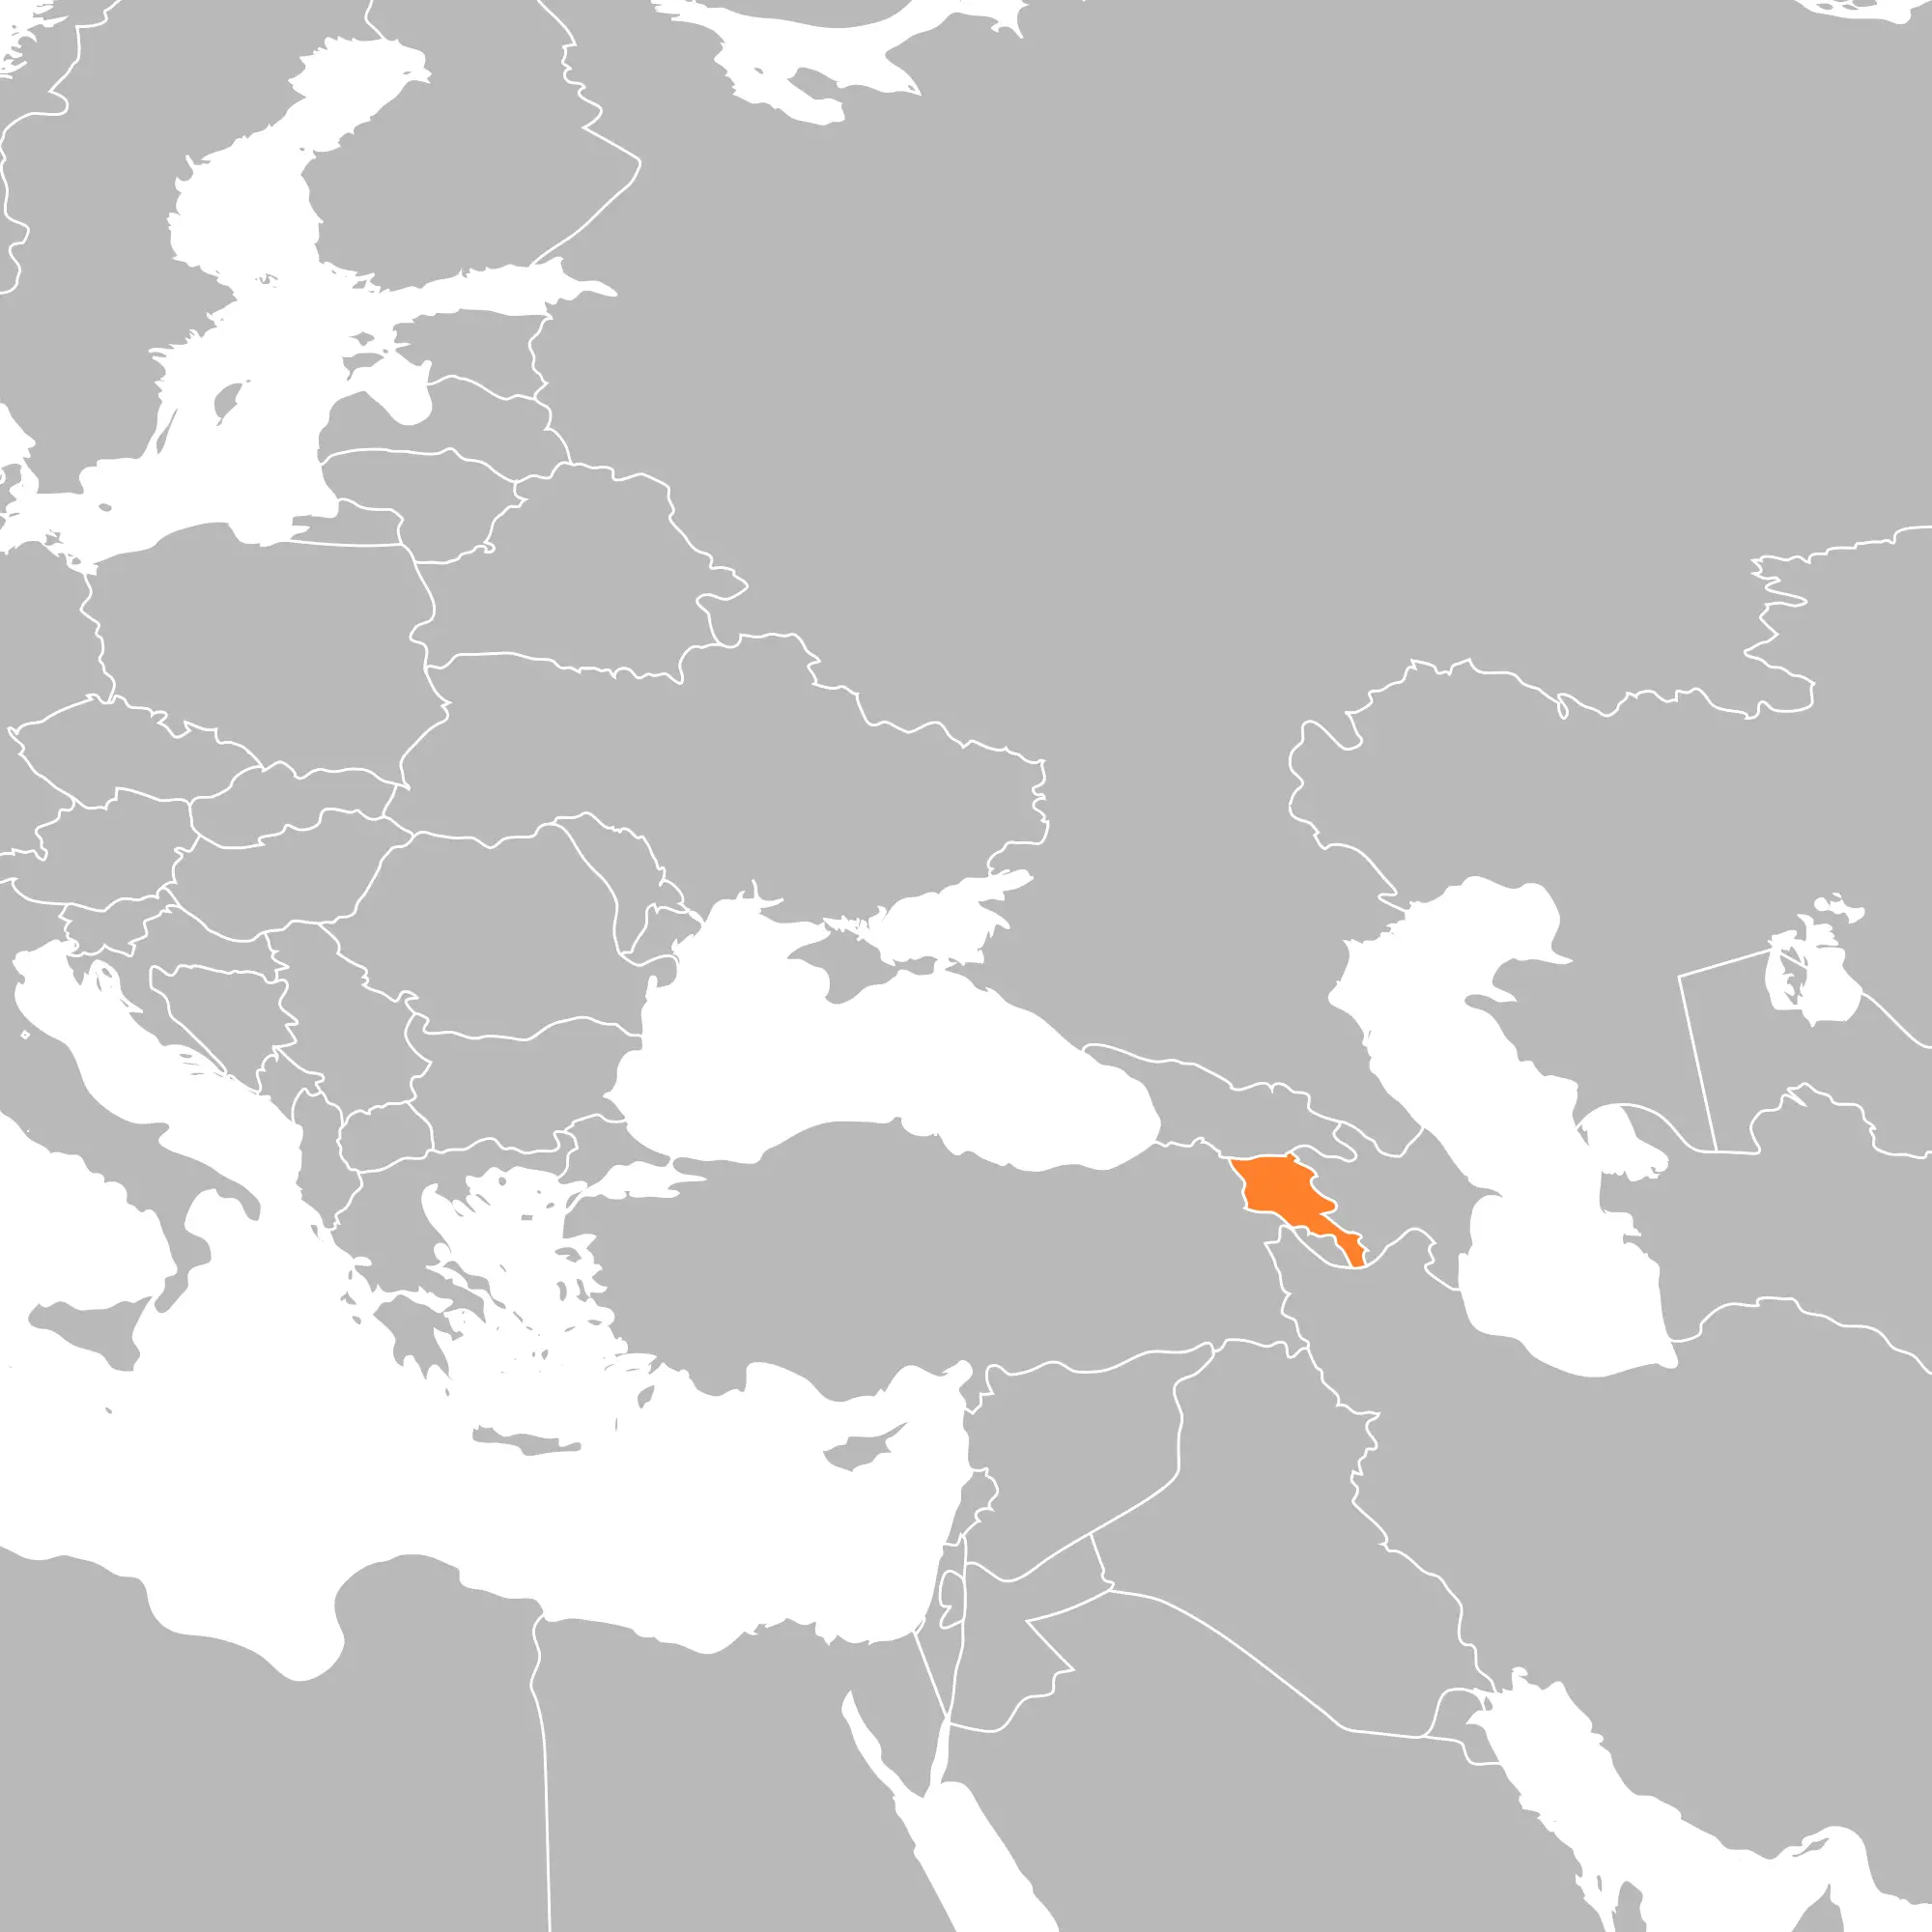 Europe Map Location of Armenia